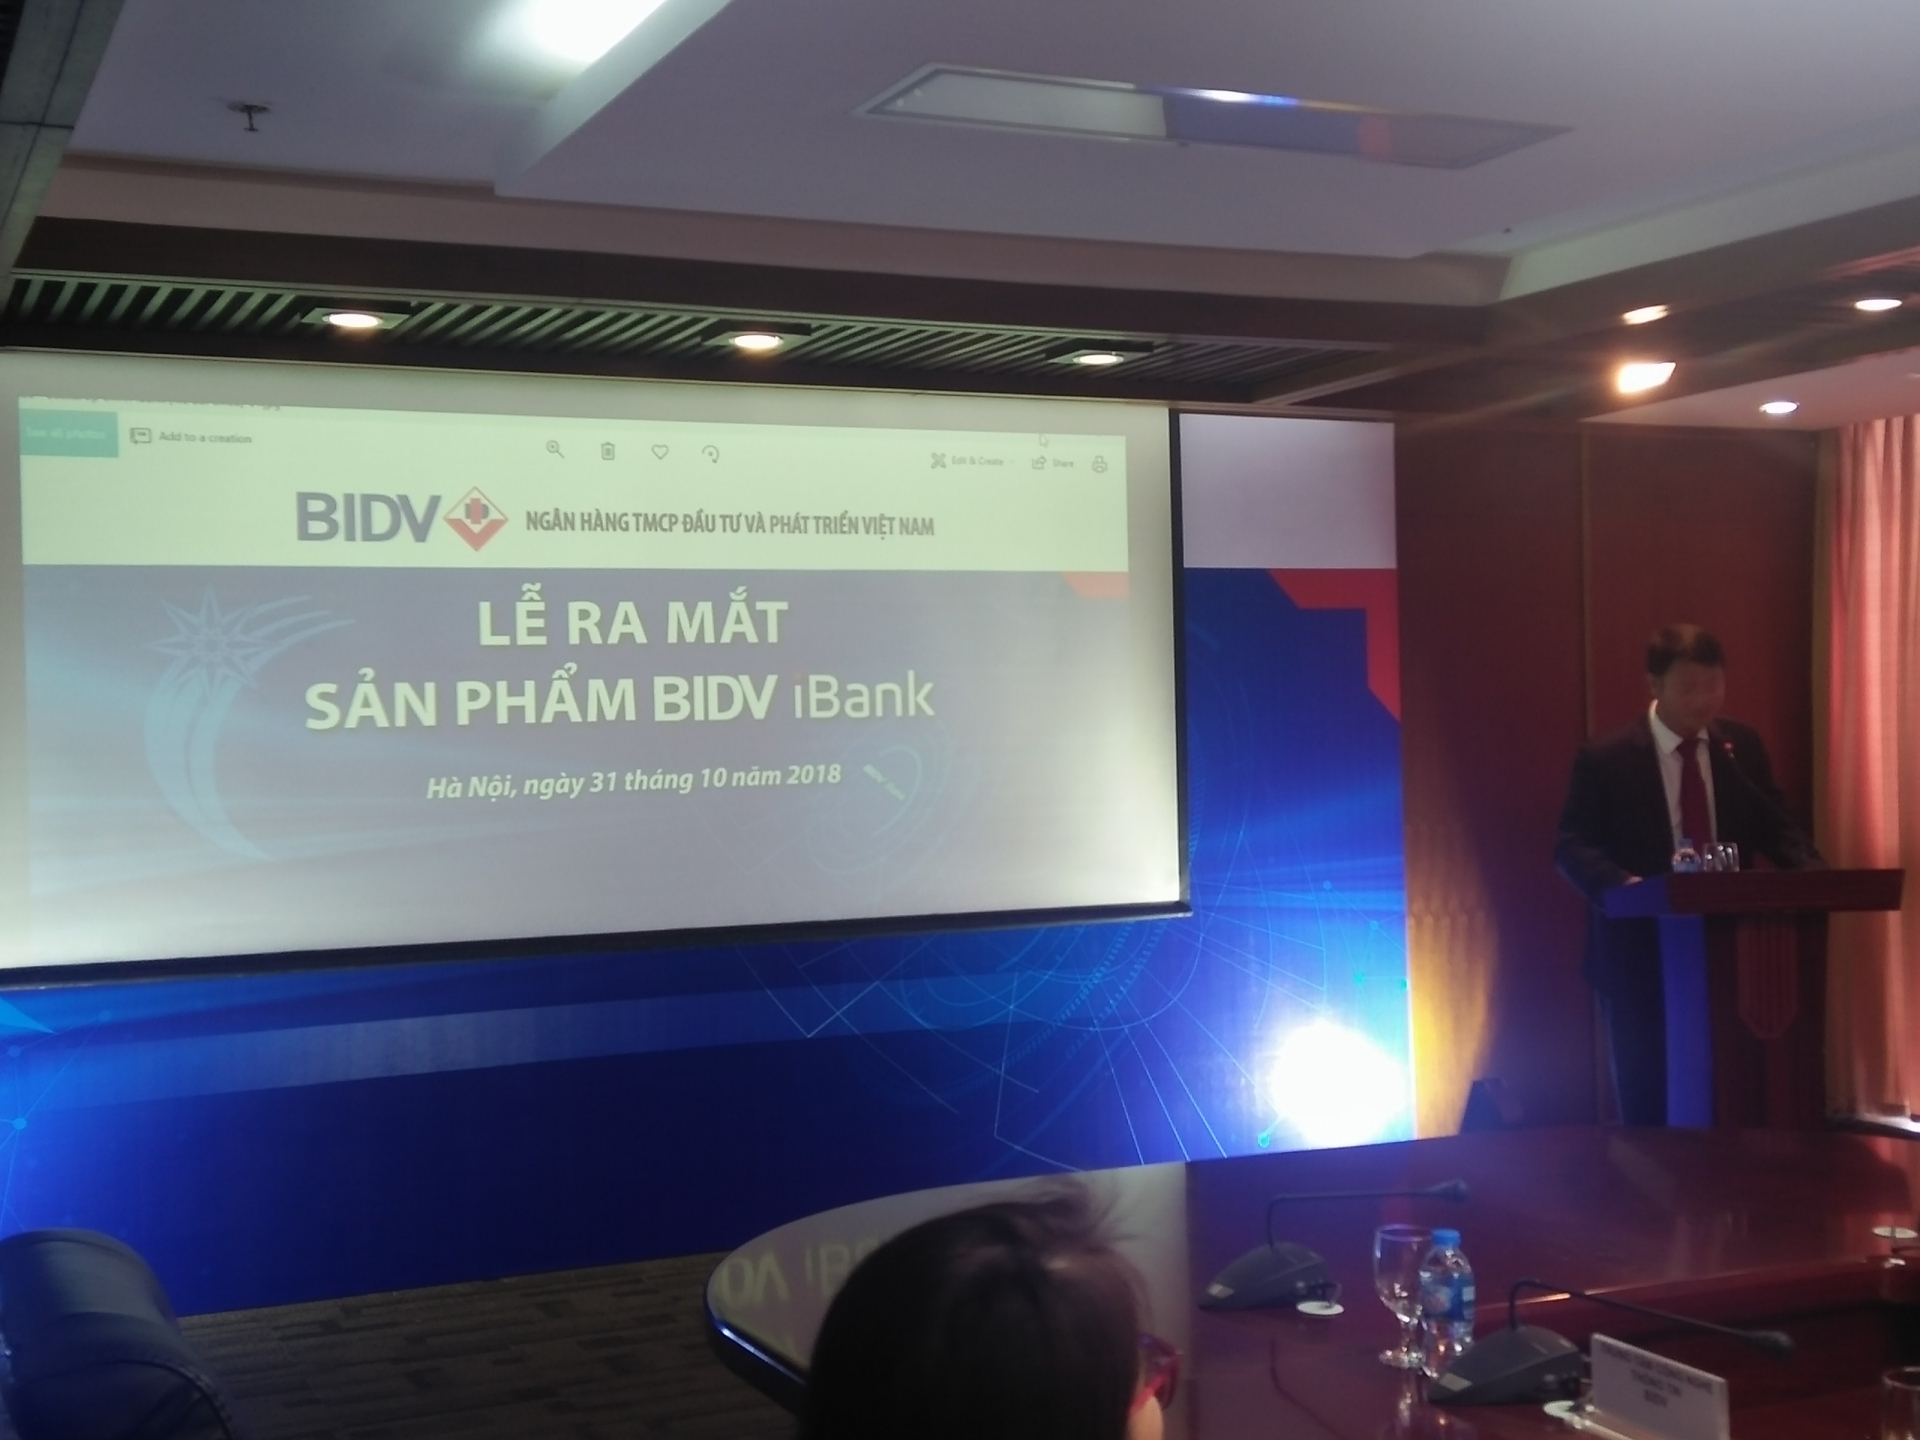 BIDV launches e-banking service for corporate clients